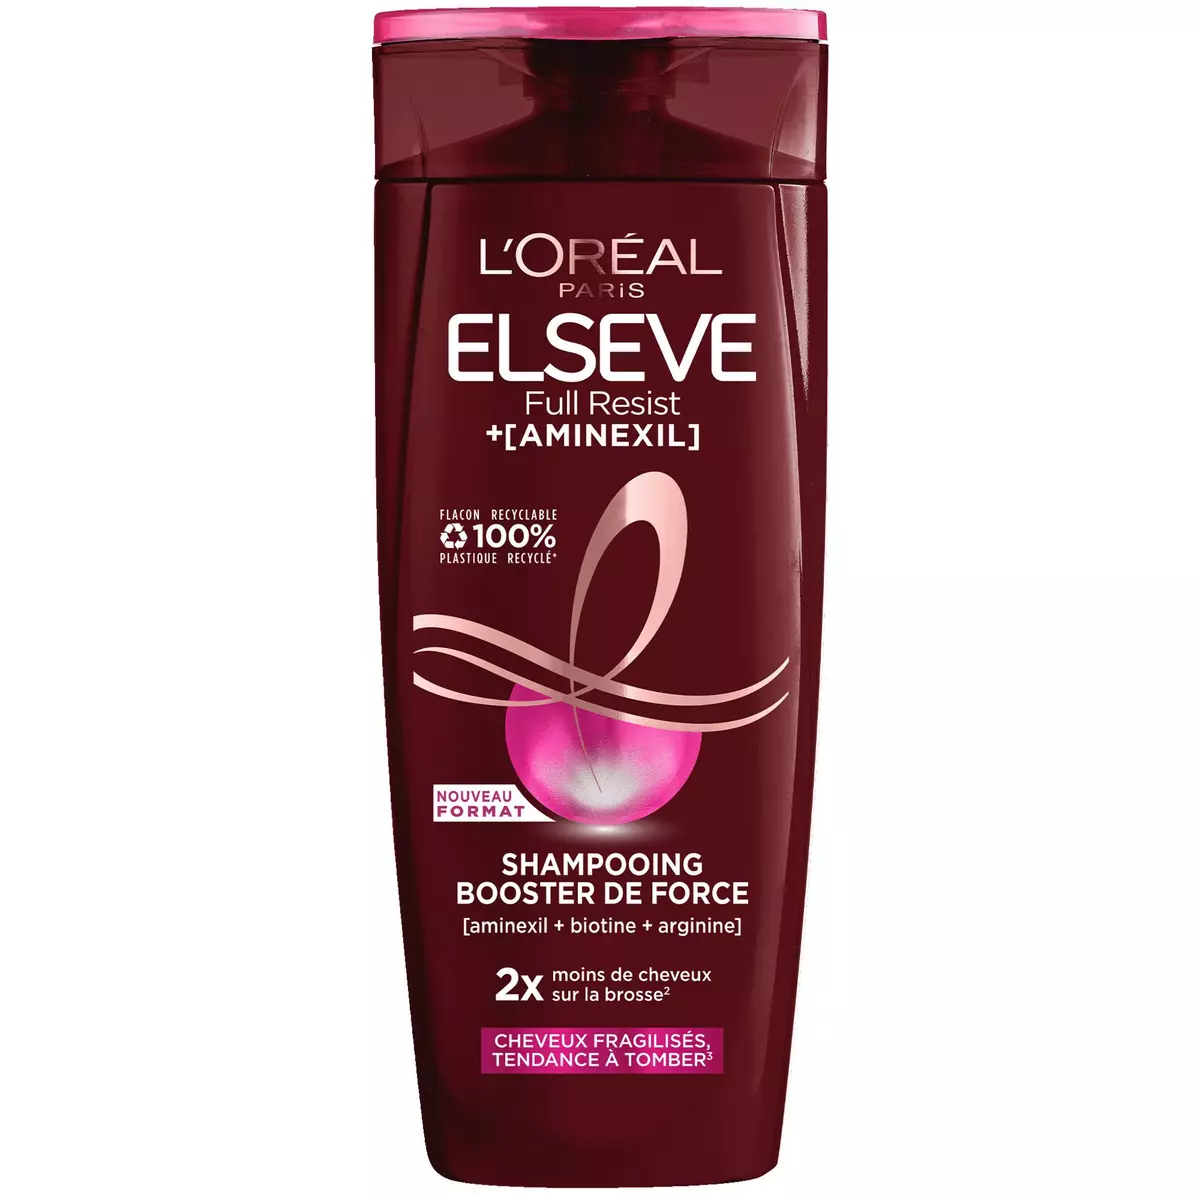 ELSEVE Full Resist +aminexil Shampooing booster de force cheveux fragilisés tendance à tomber 300ml